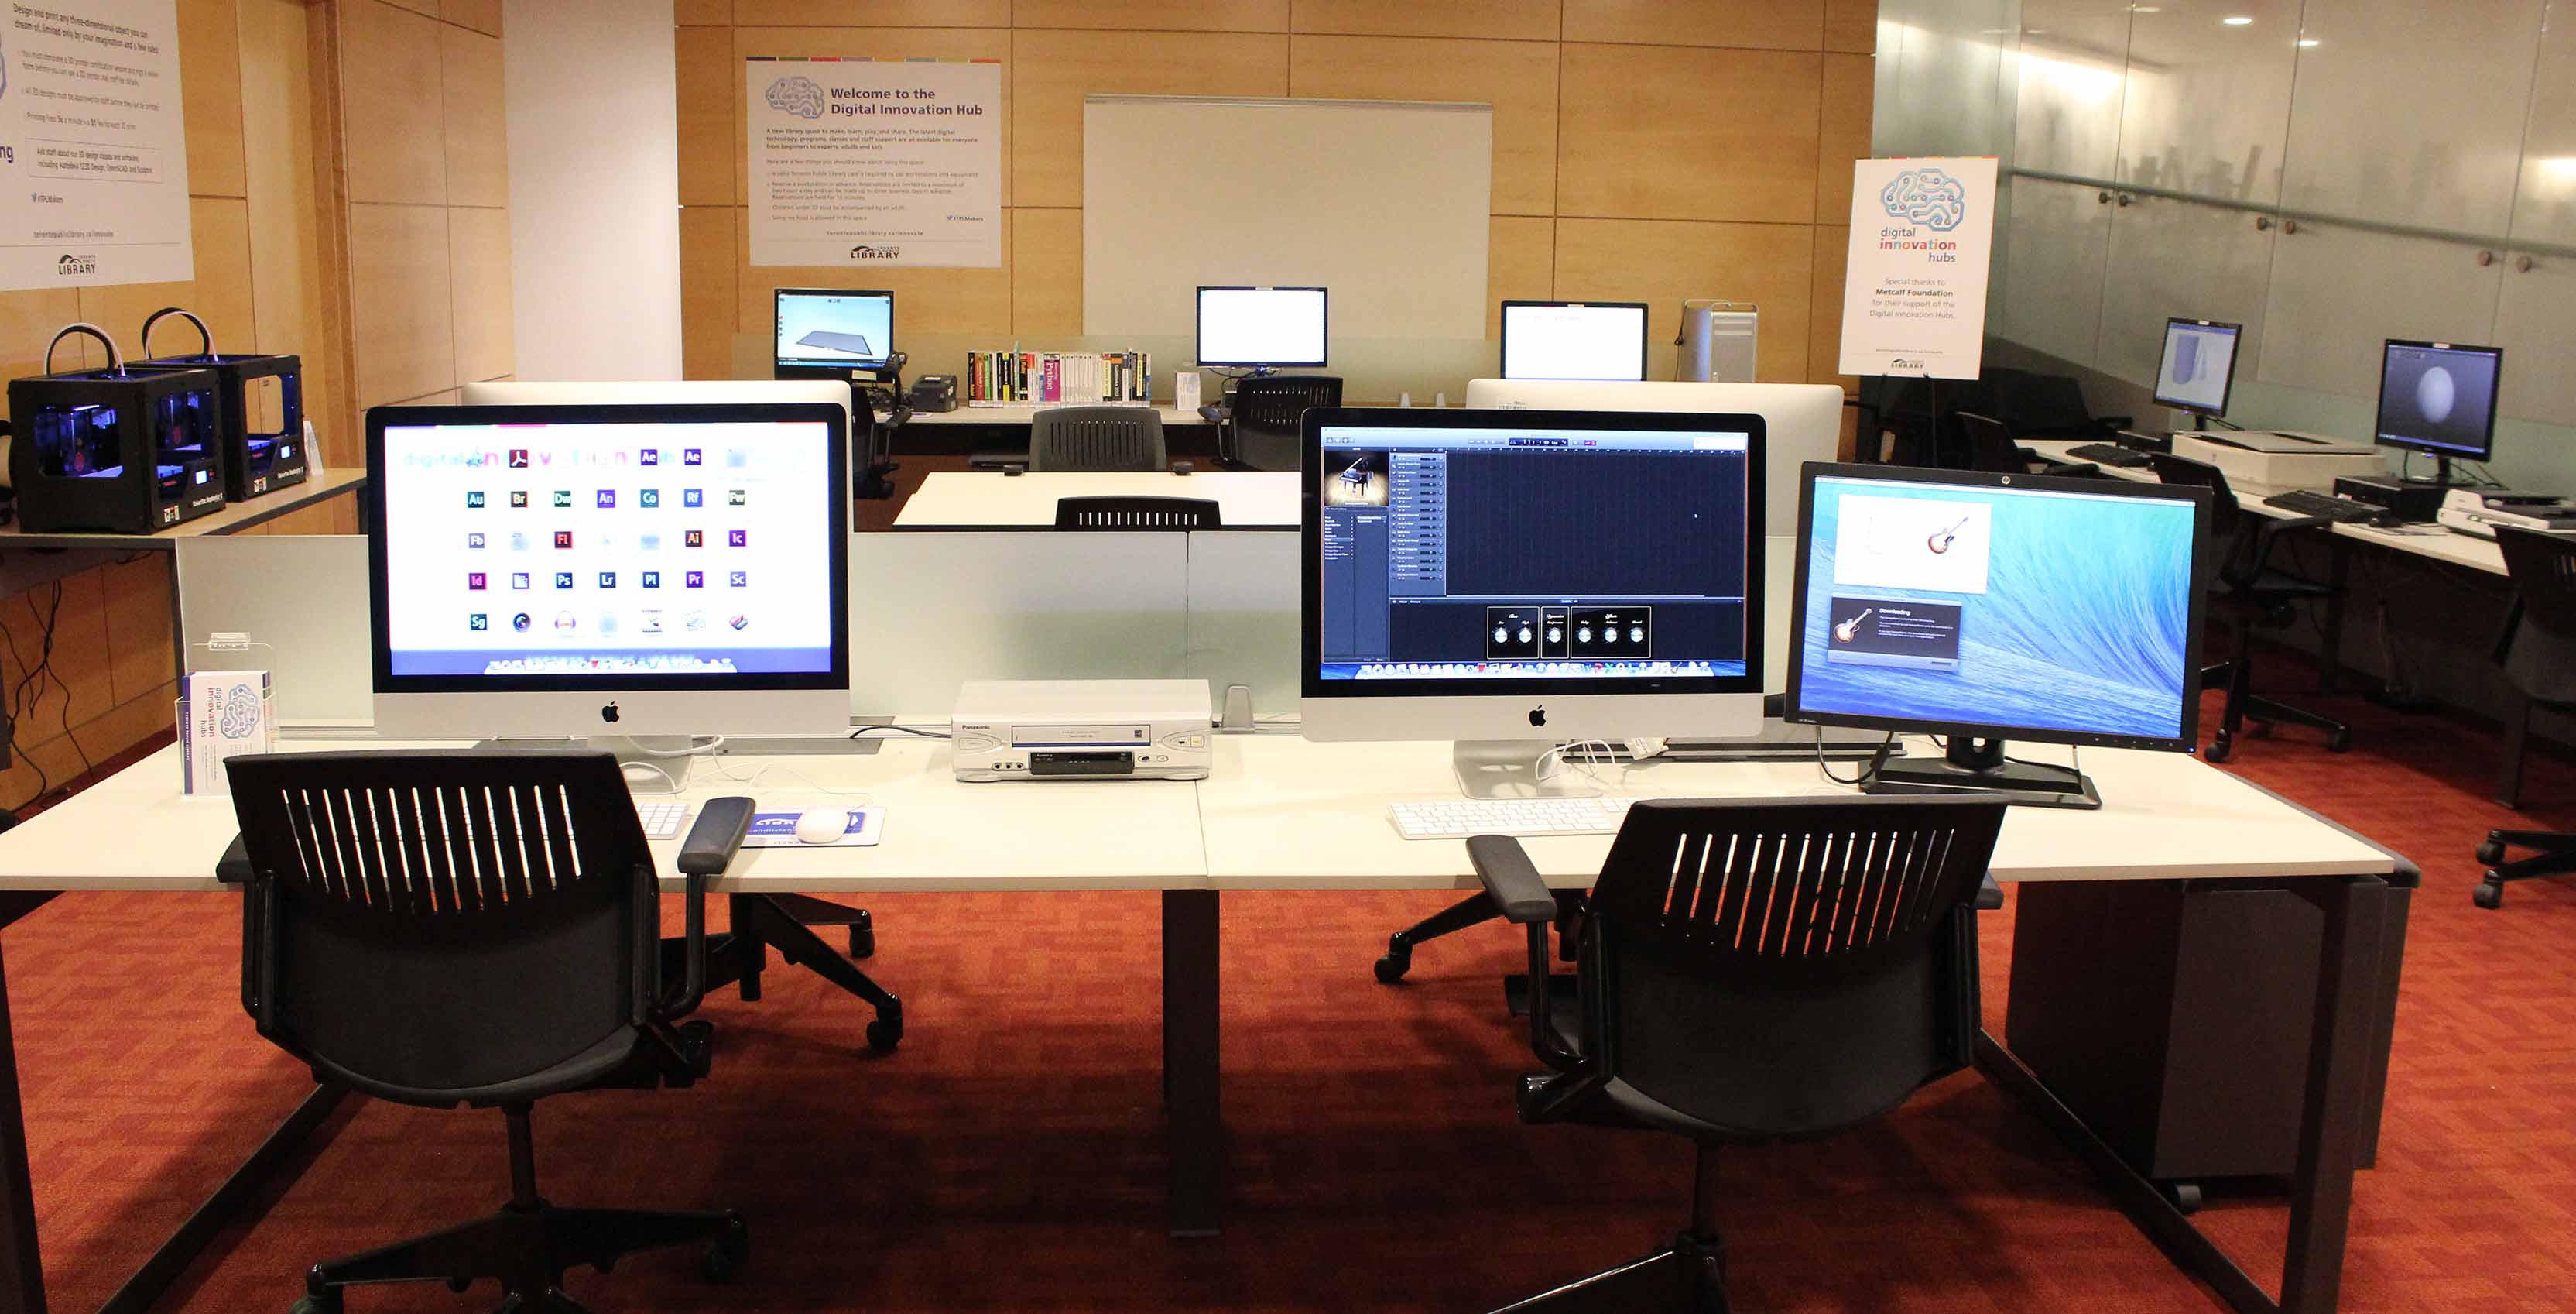 Digital Innovation Hub's Macs at the Toronto Public Library